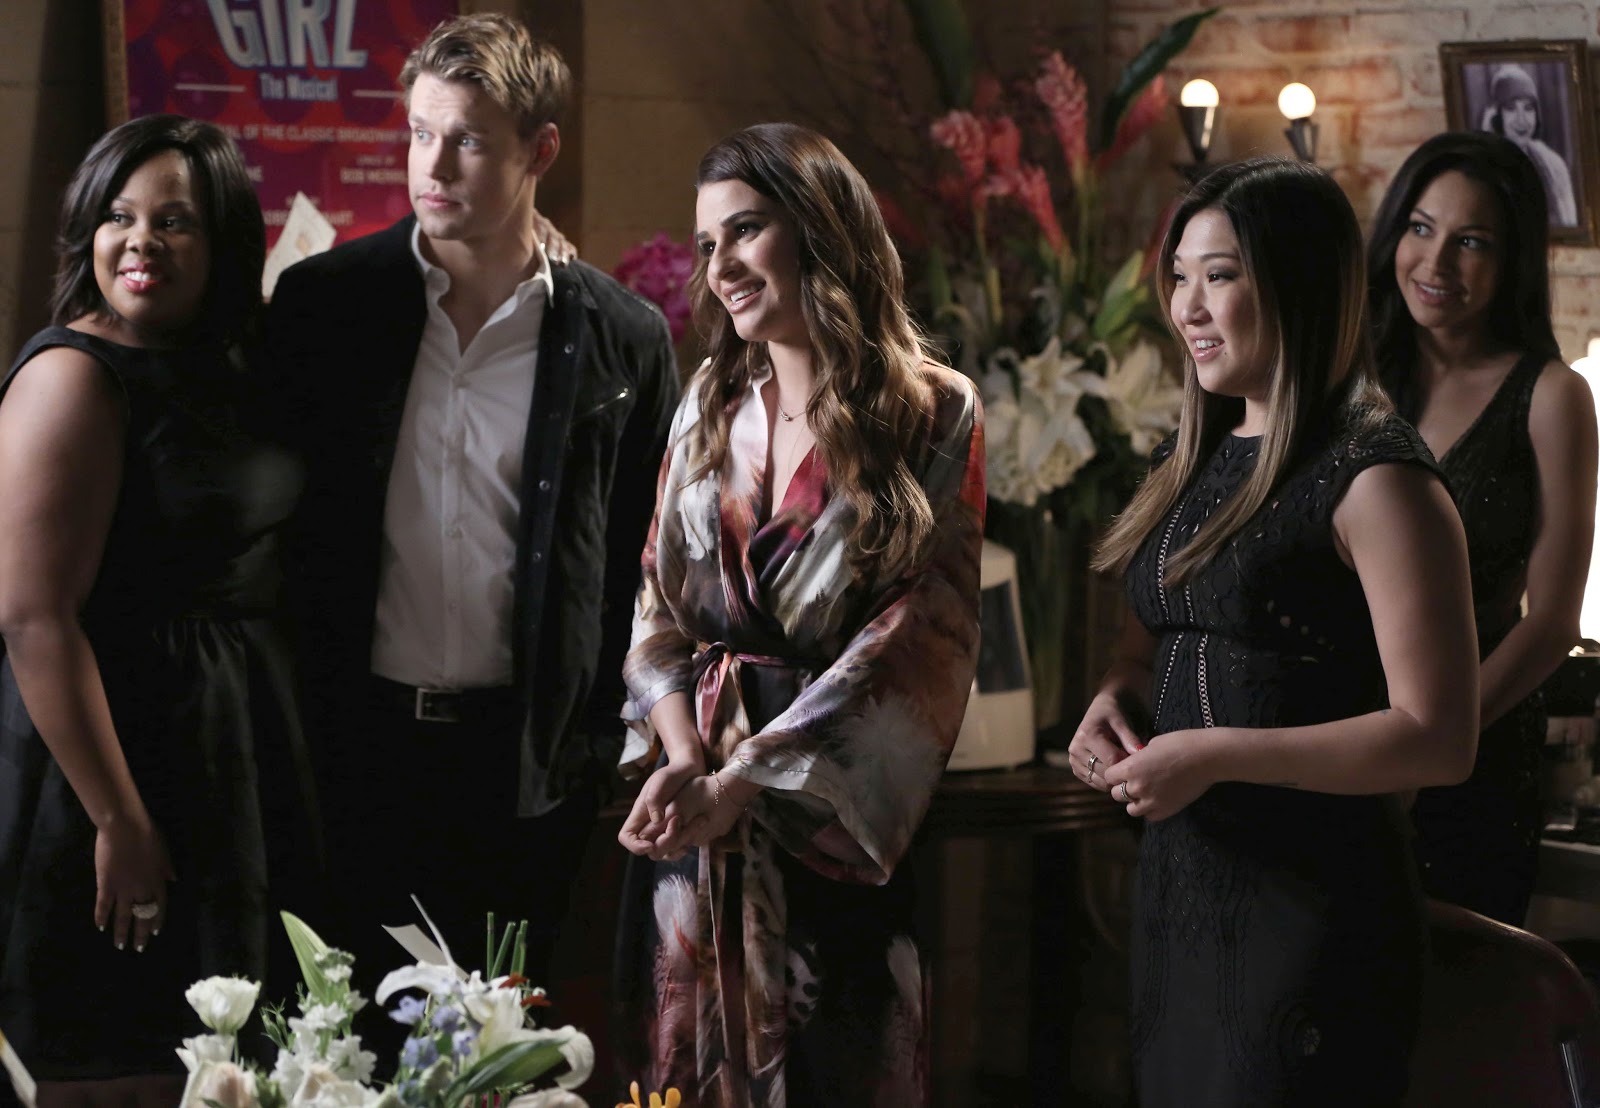 Glee - Episode 5.17 - Opening Night - Promotional Photos